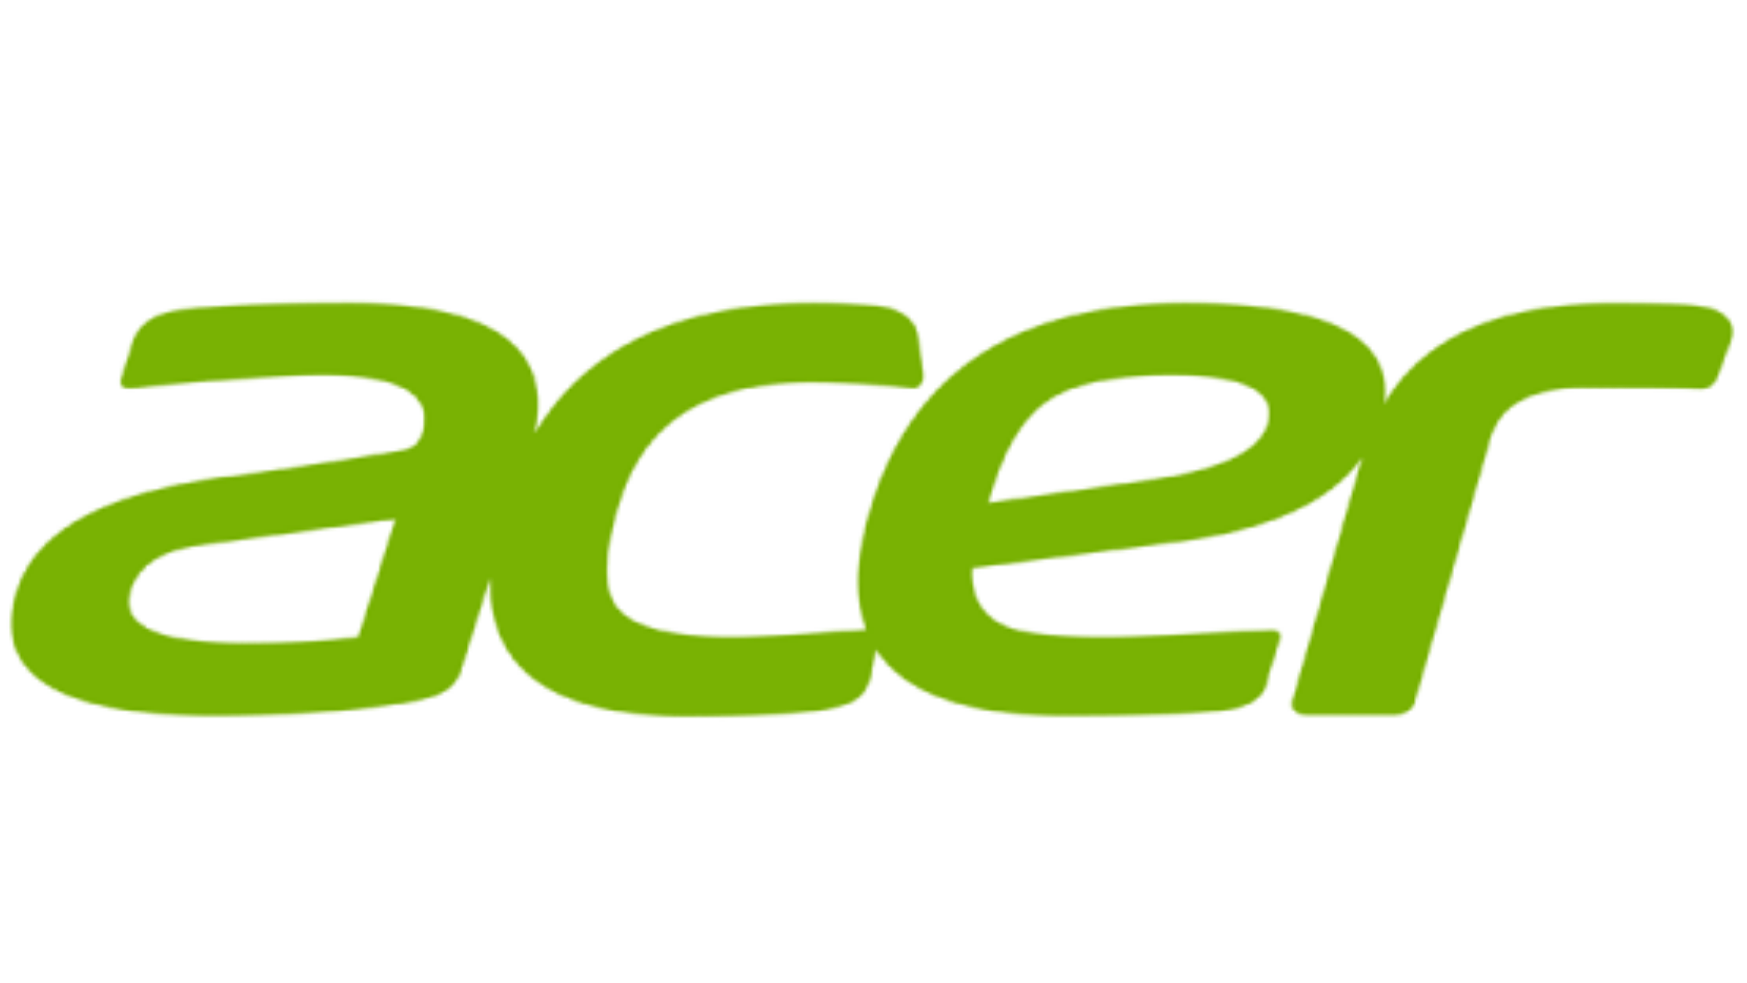 Acer.com: bis zu 200 Euro Rabatt abräumen